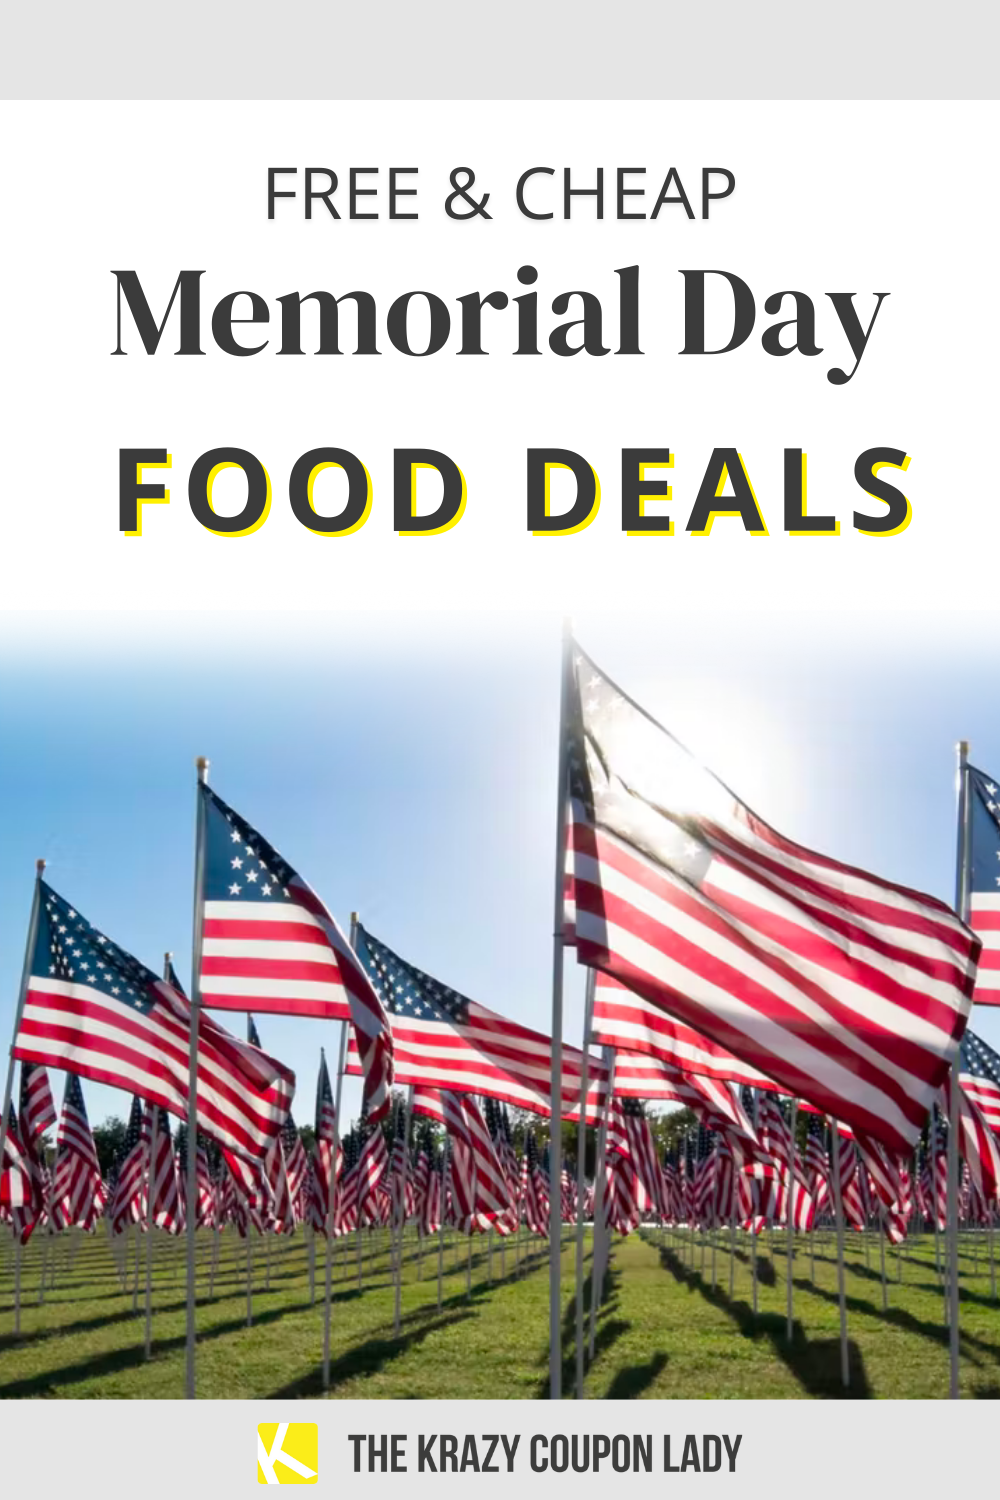 13 Memorial Day Food Deals Still Available: Subway, Shake Shack